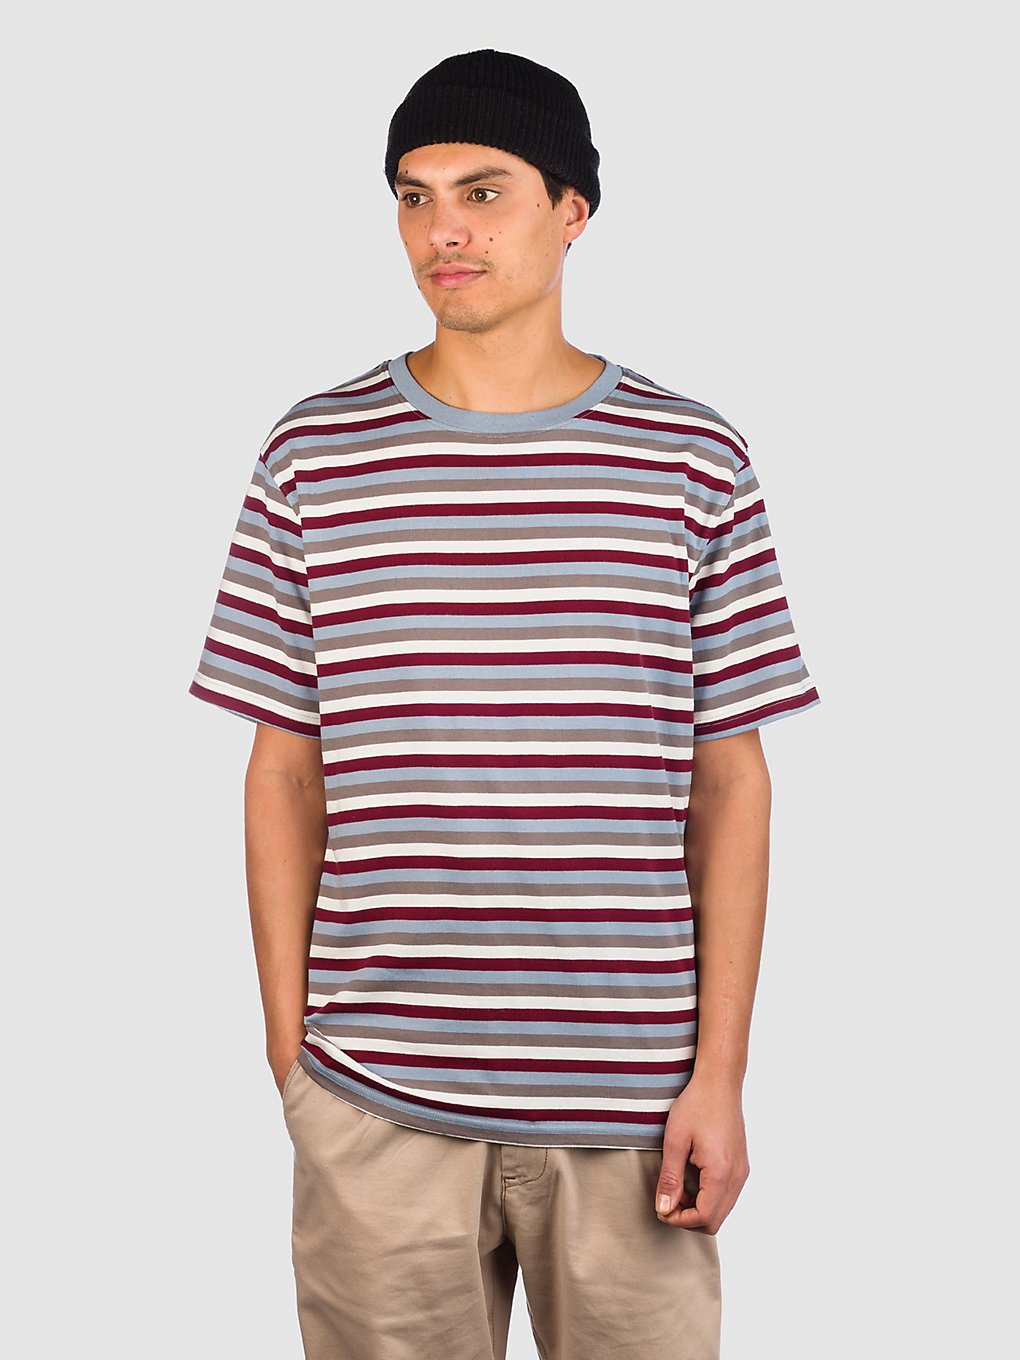 Zine Bonus Stripe T-Shirt maro kaufen